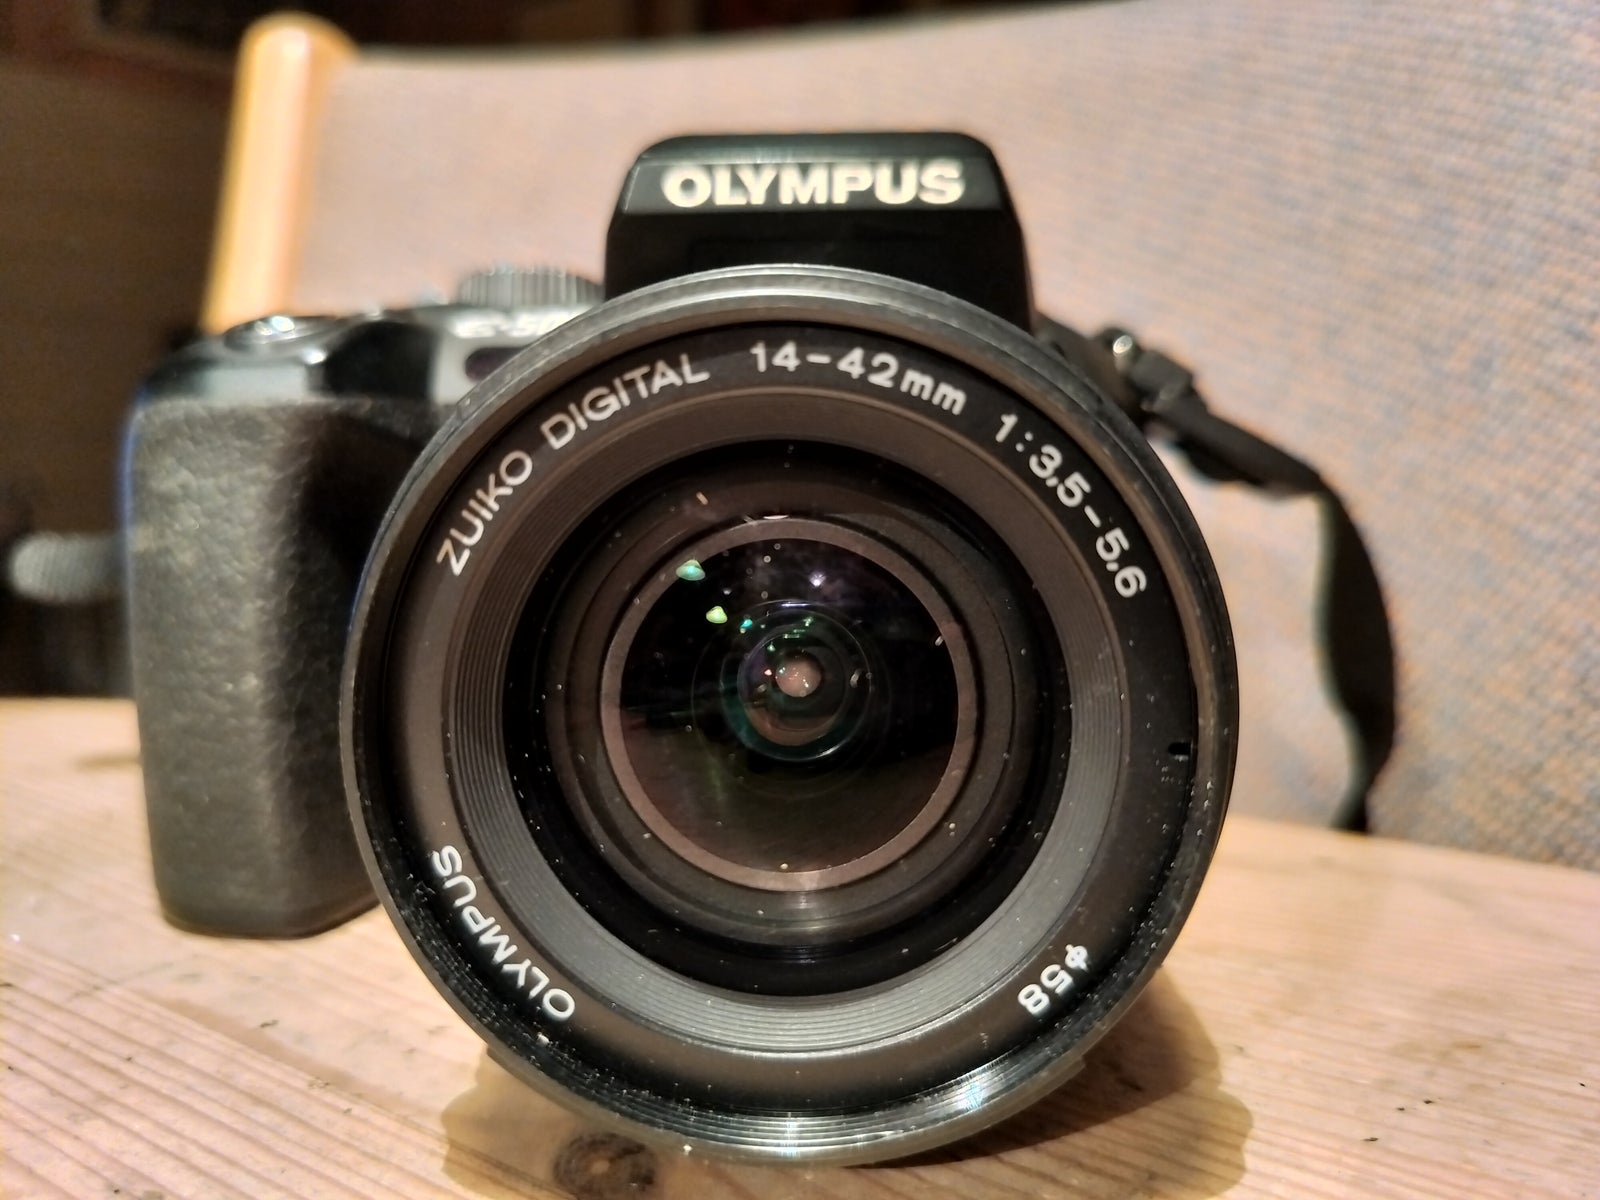 Olympus E-500, 8.0 megapixels, God